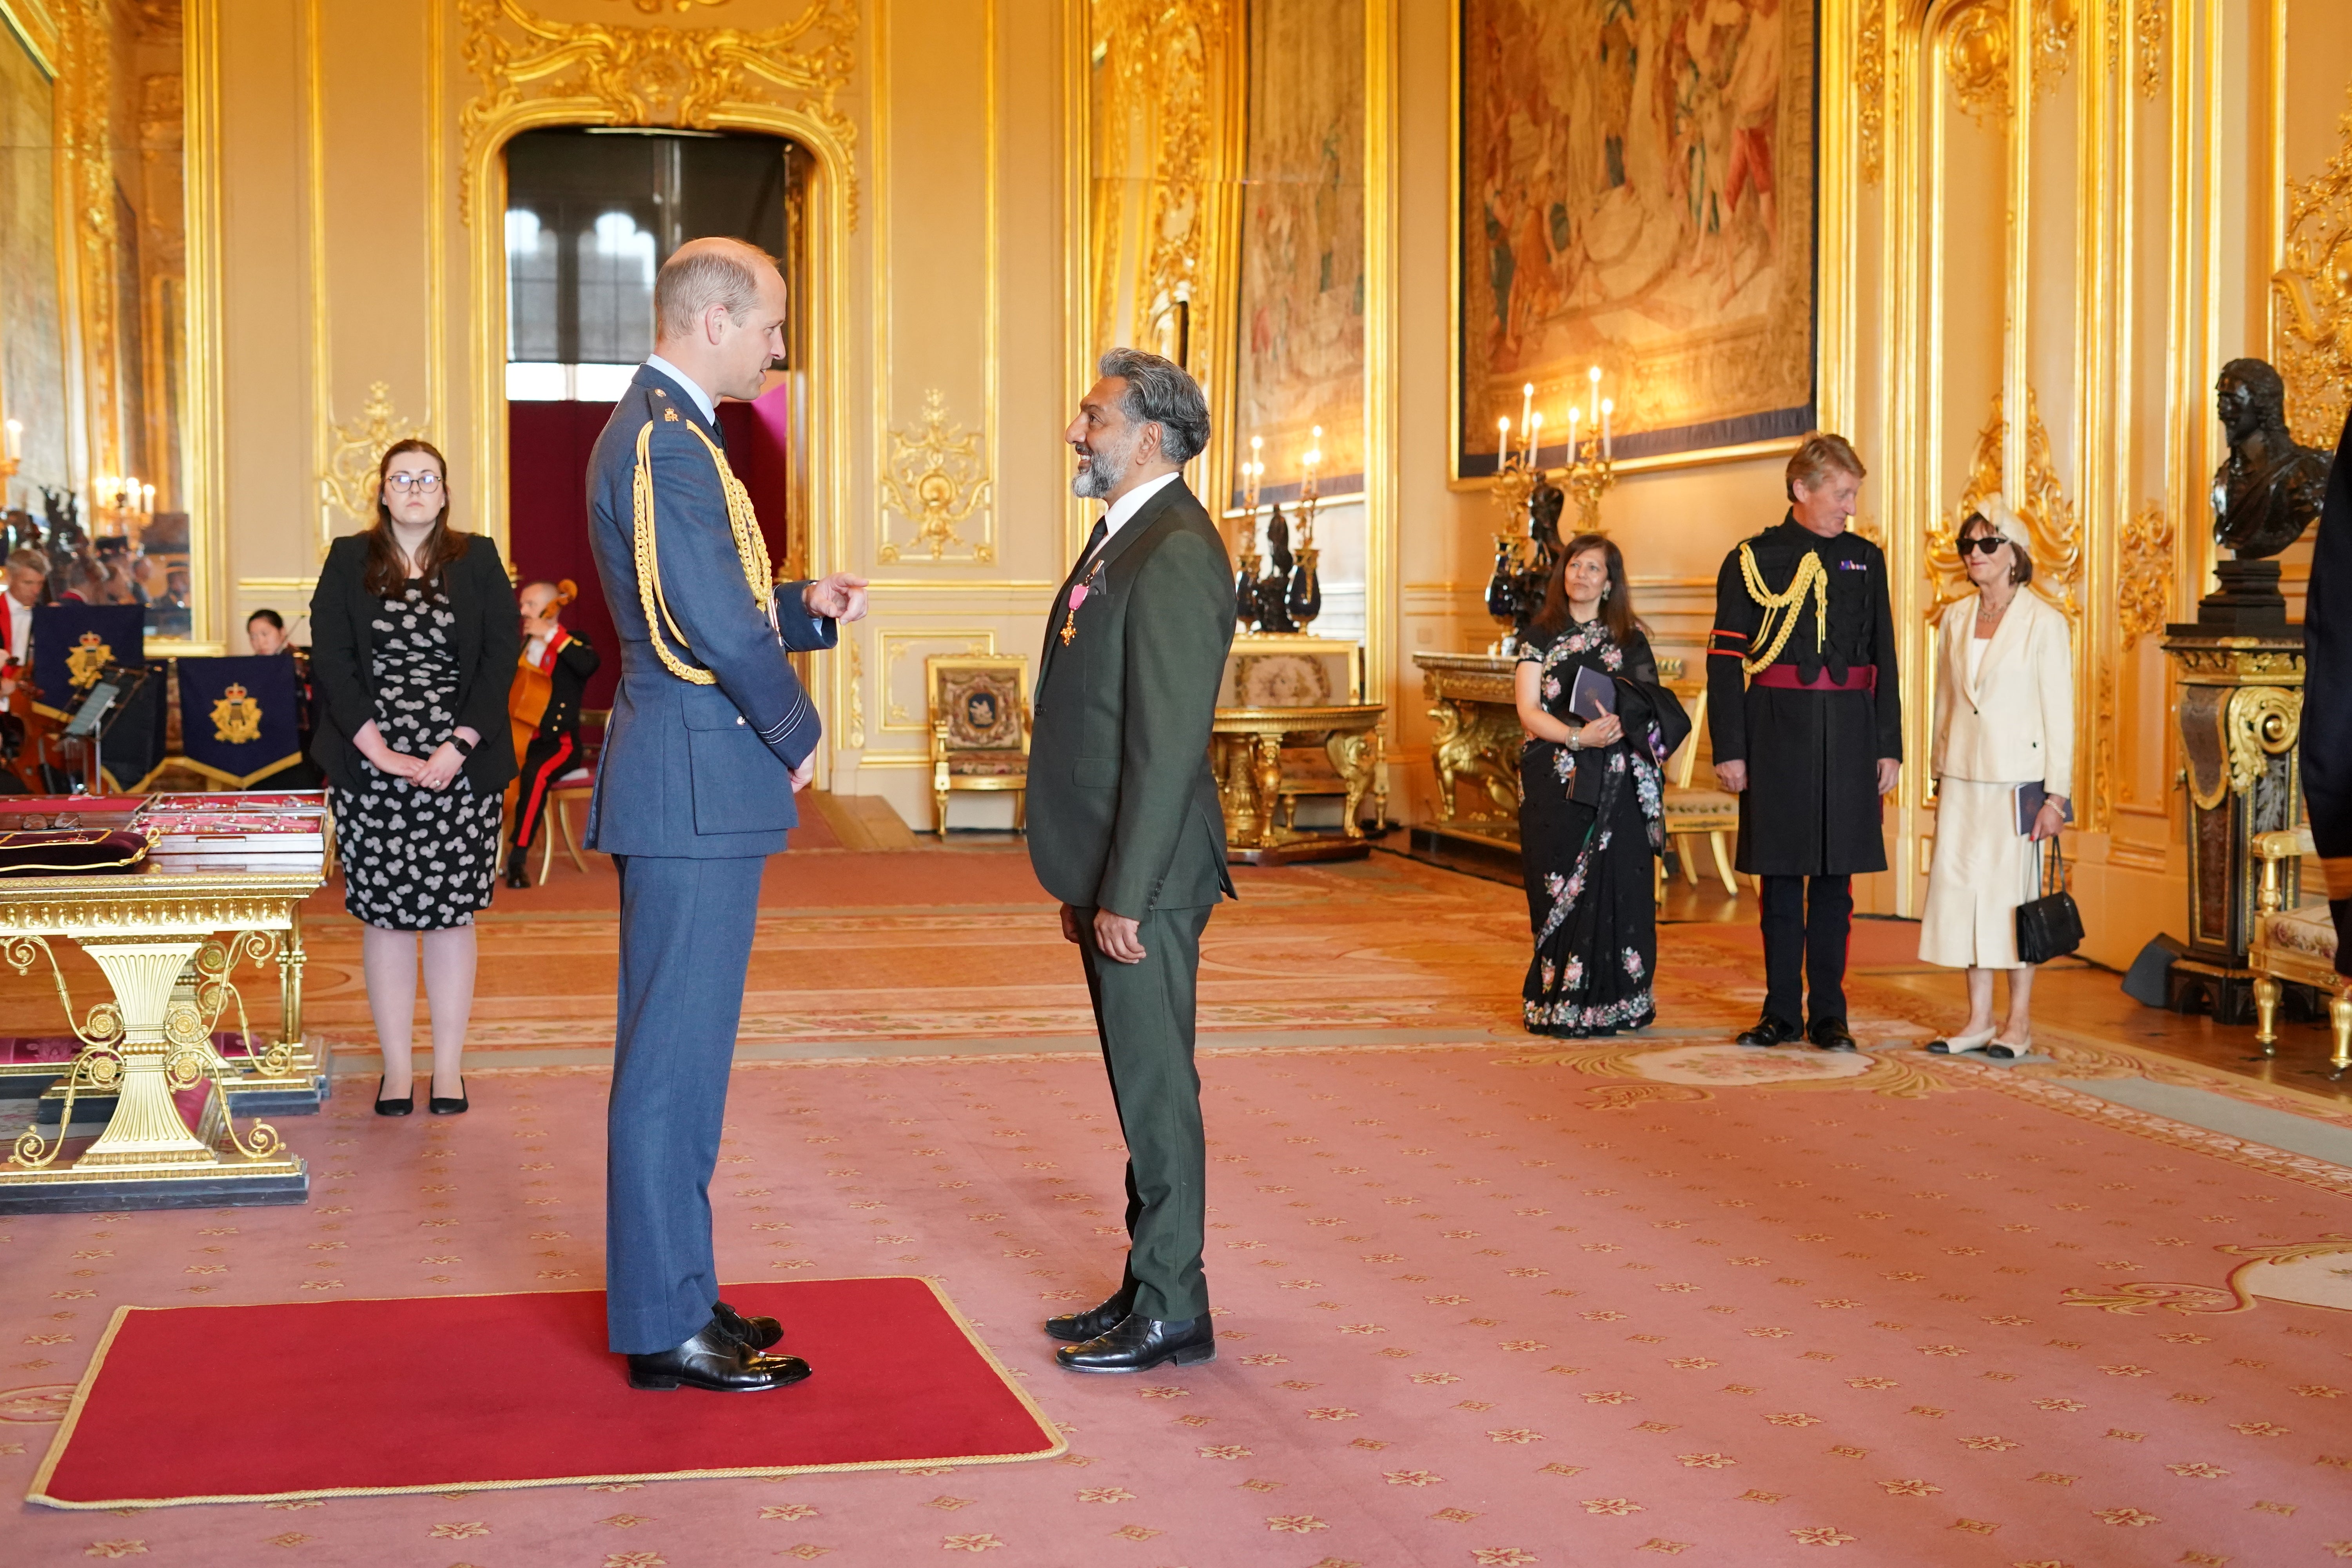 Nitin Ganatra with the Duke of Cambridge at Windsor Castle (Jonathan Brady/PA Wire)